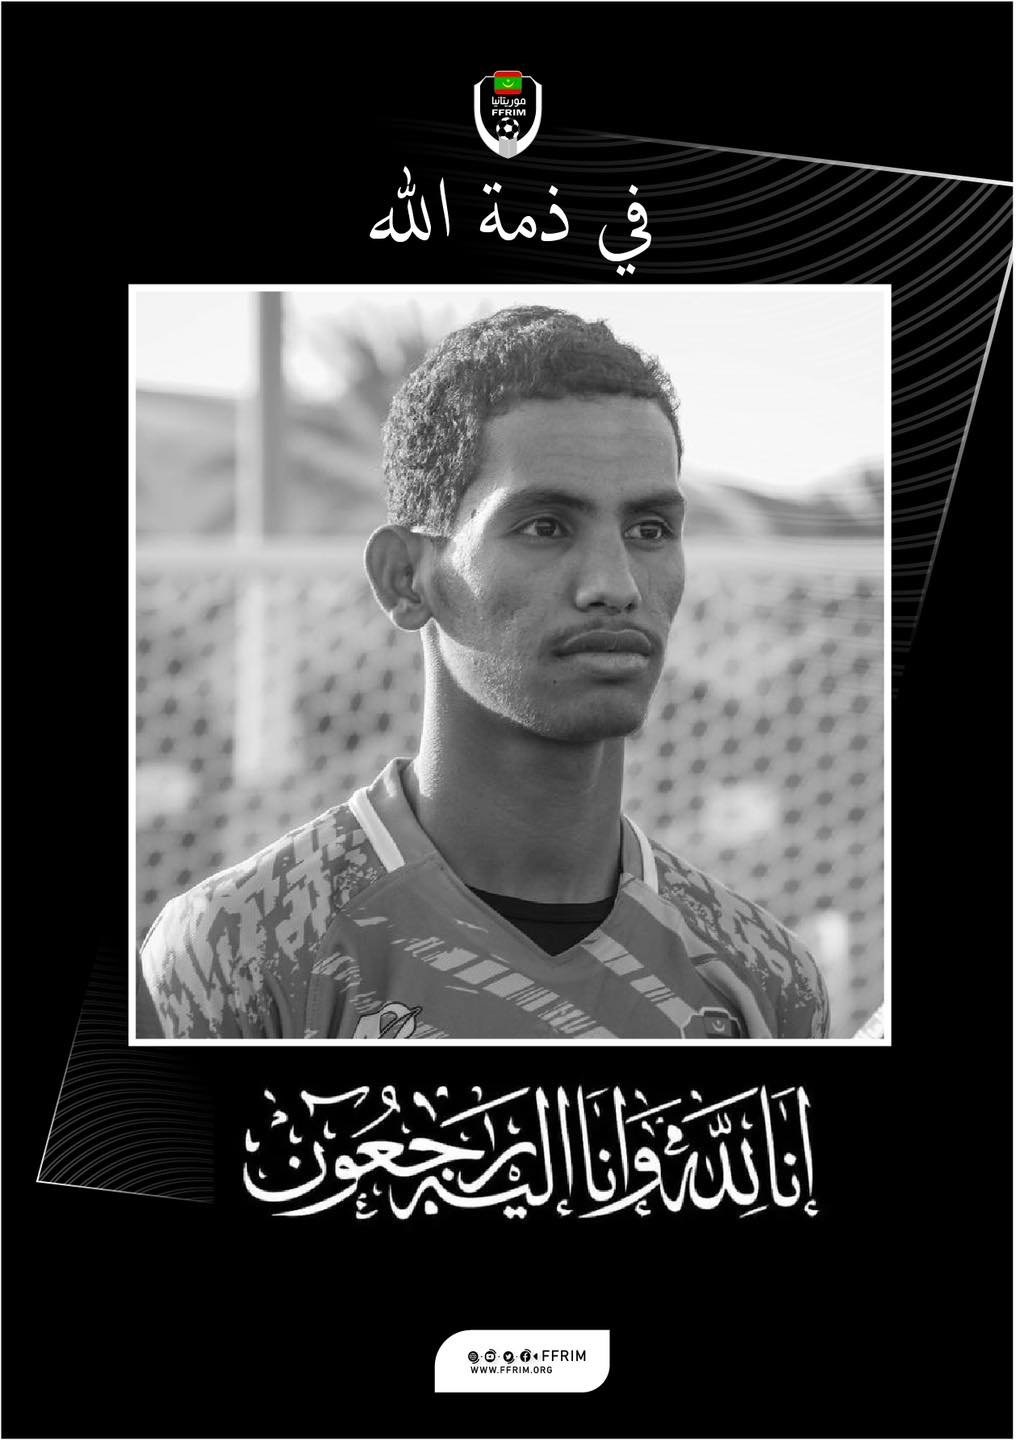 Mauratianian goalkeeper Mohamed El Mokhtar has passed away.